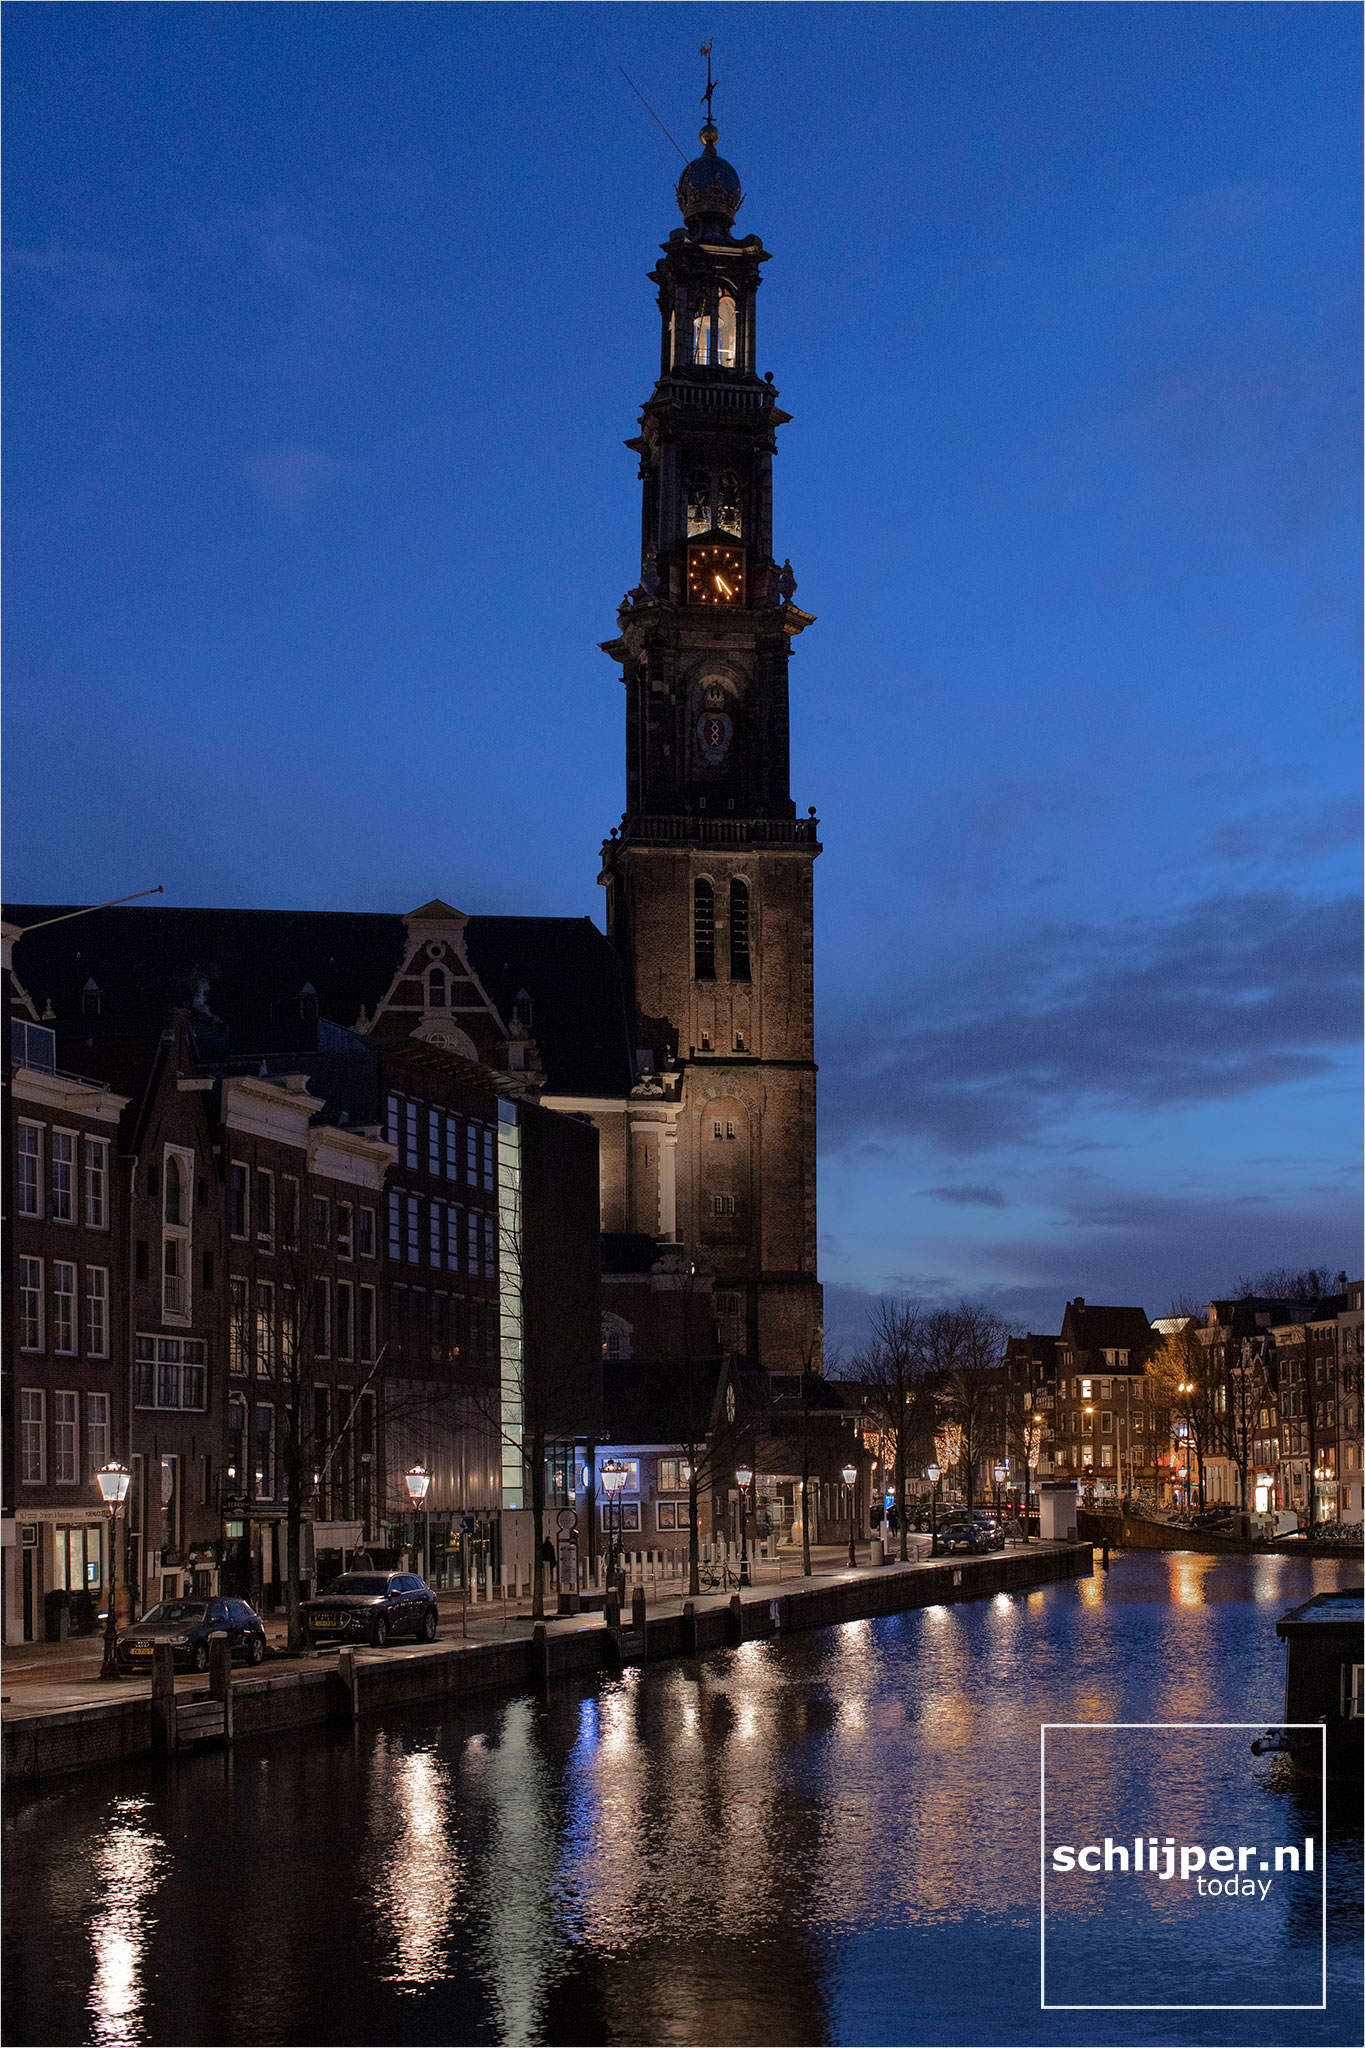 The Netherlands, Amsterdam, 24 december 2020